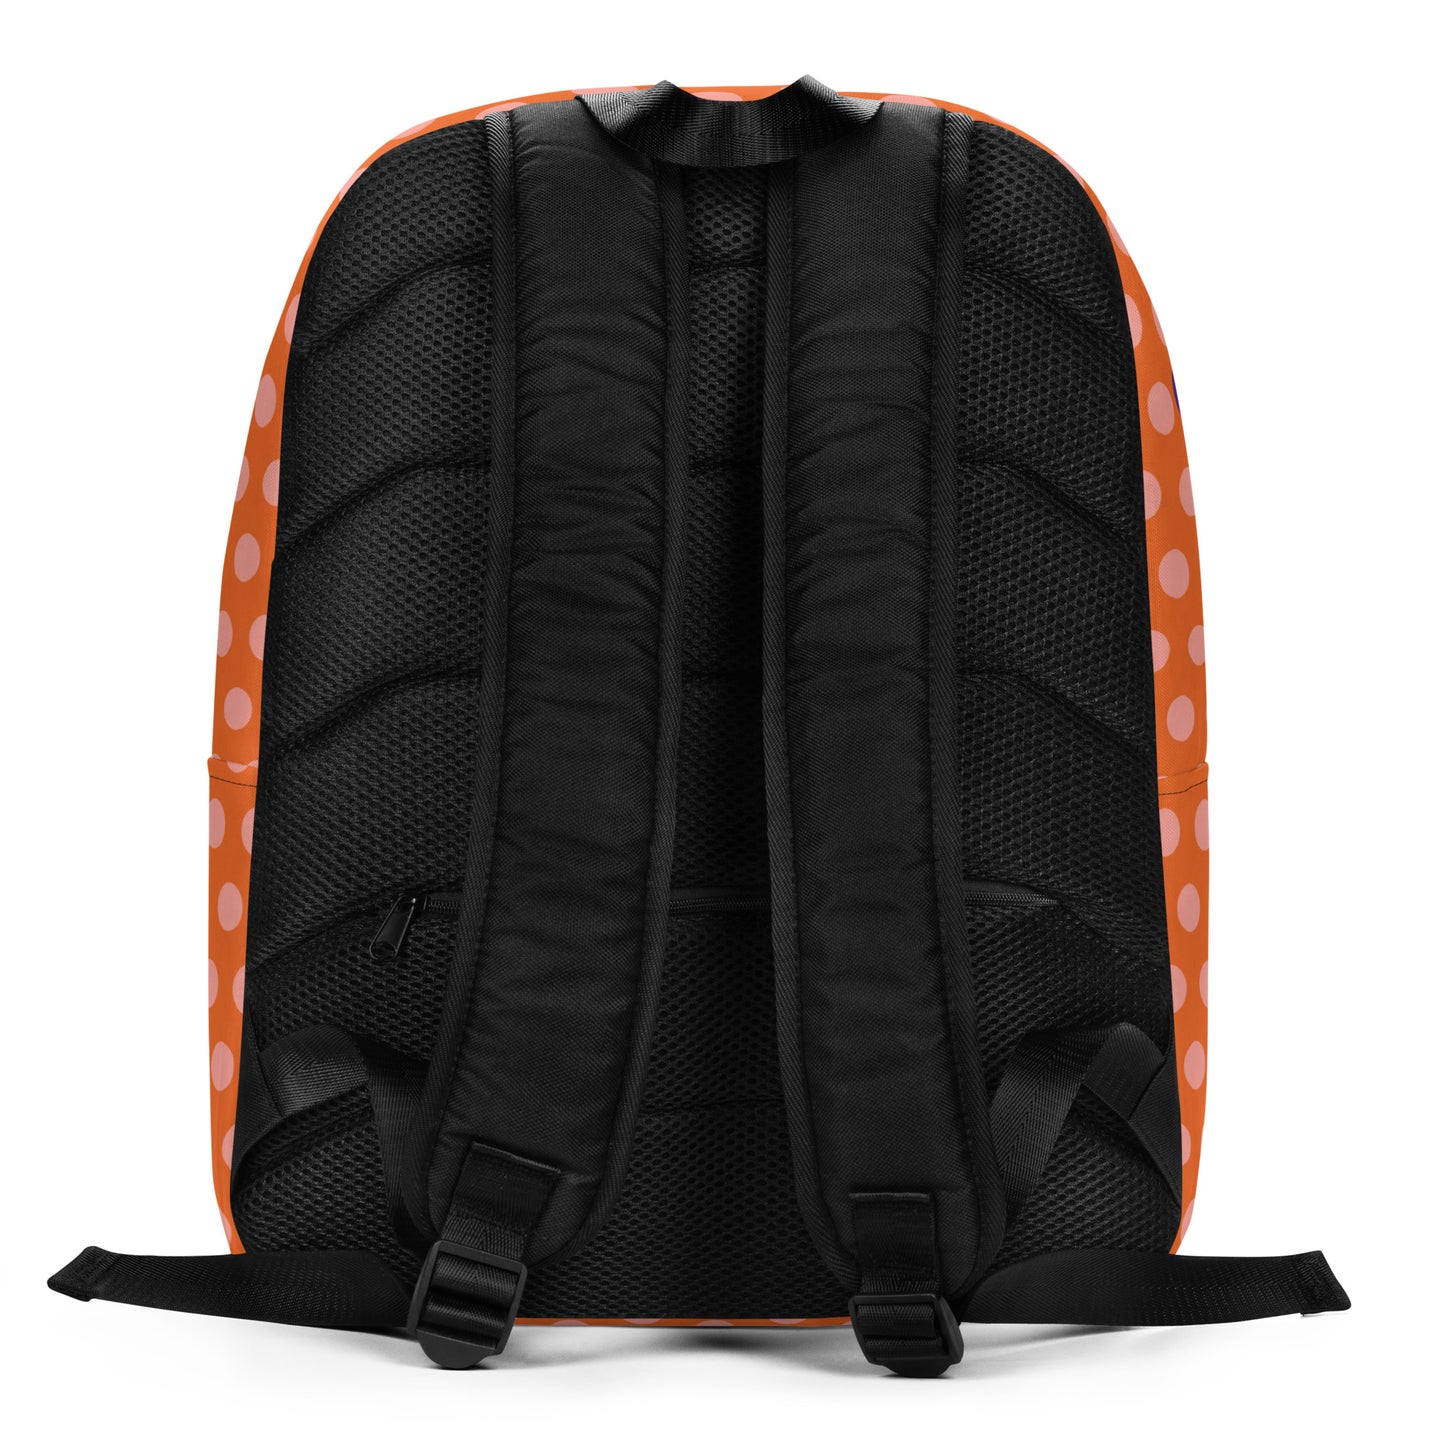 Flamenco Dancer Customizable Backpack, orange dress on a polka dot design. - IllustrArte